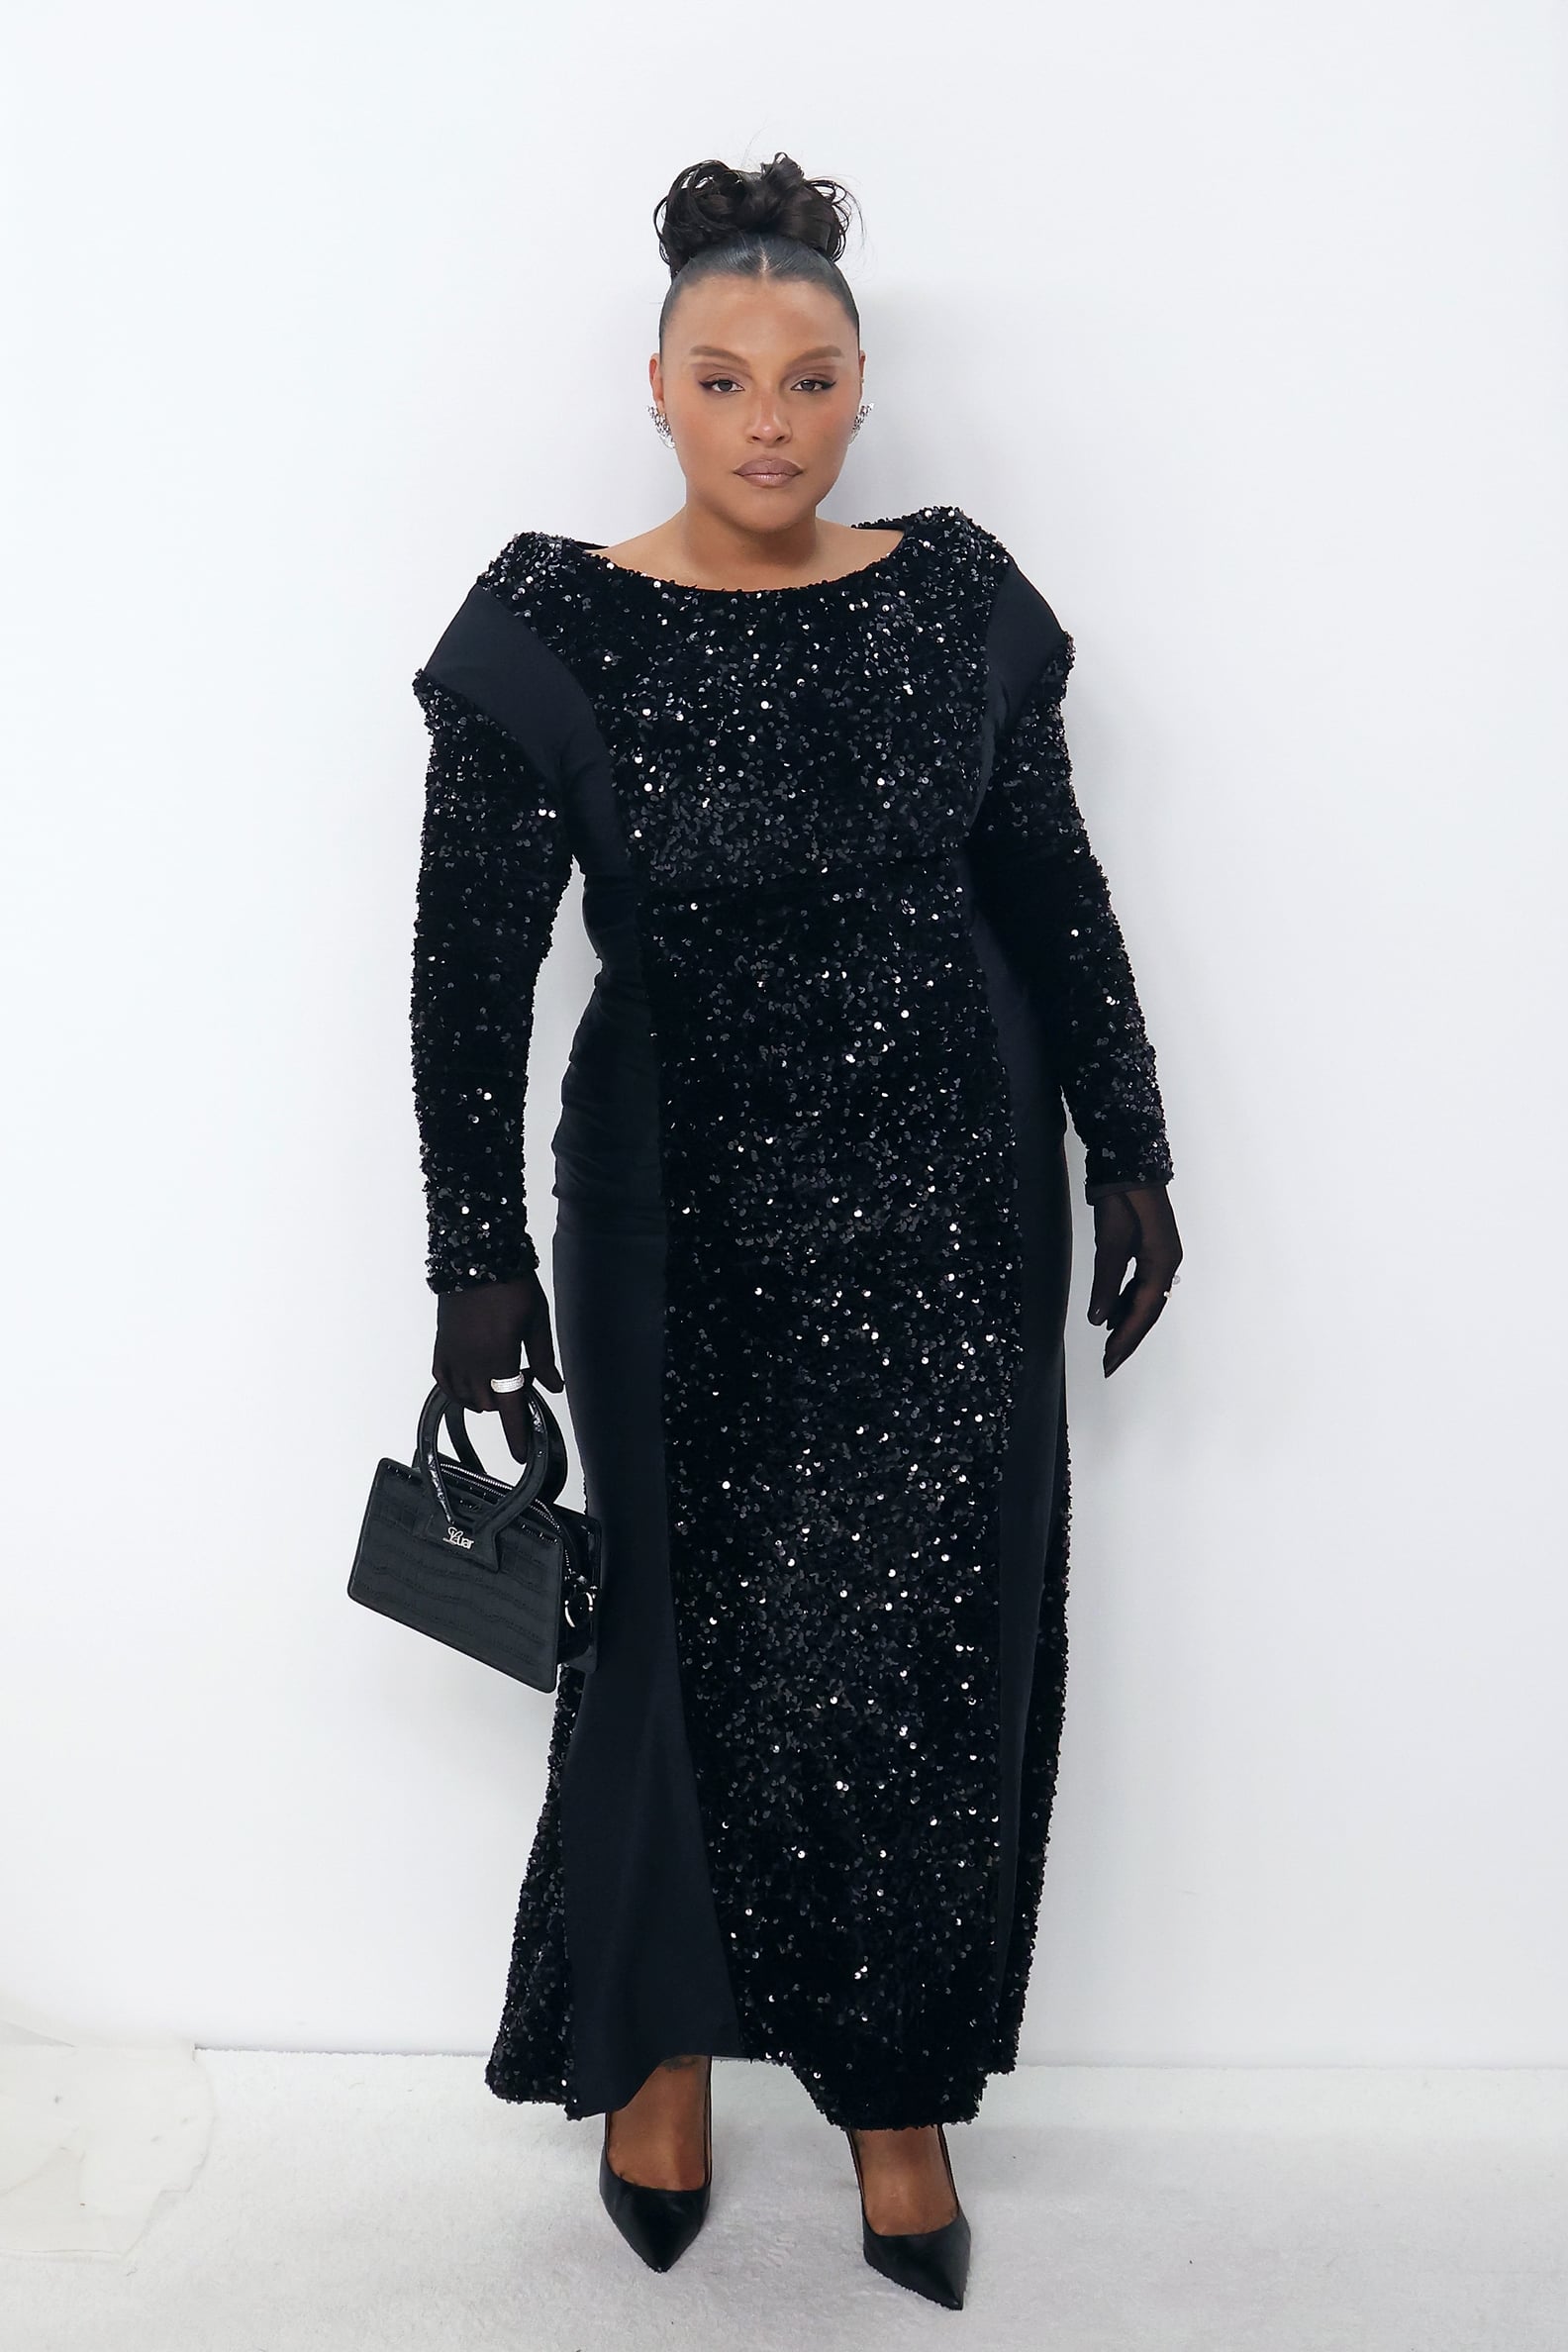 Julia Fox's Black Cutout Dress at the CFDA Fashion Awards | POPSUGAR ...